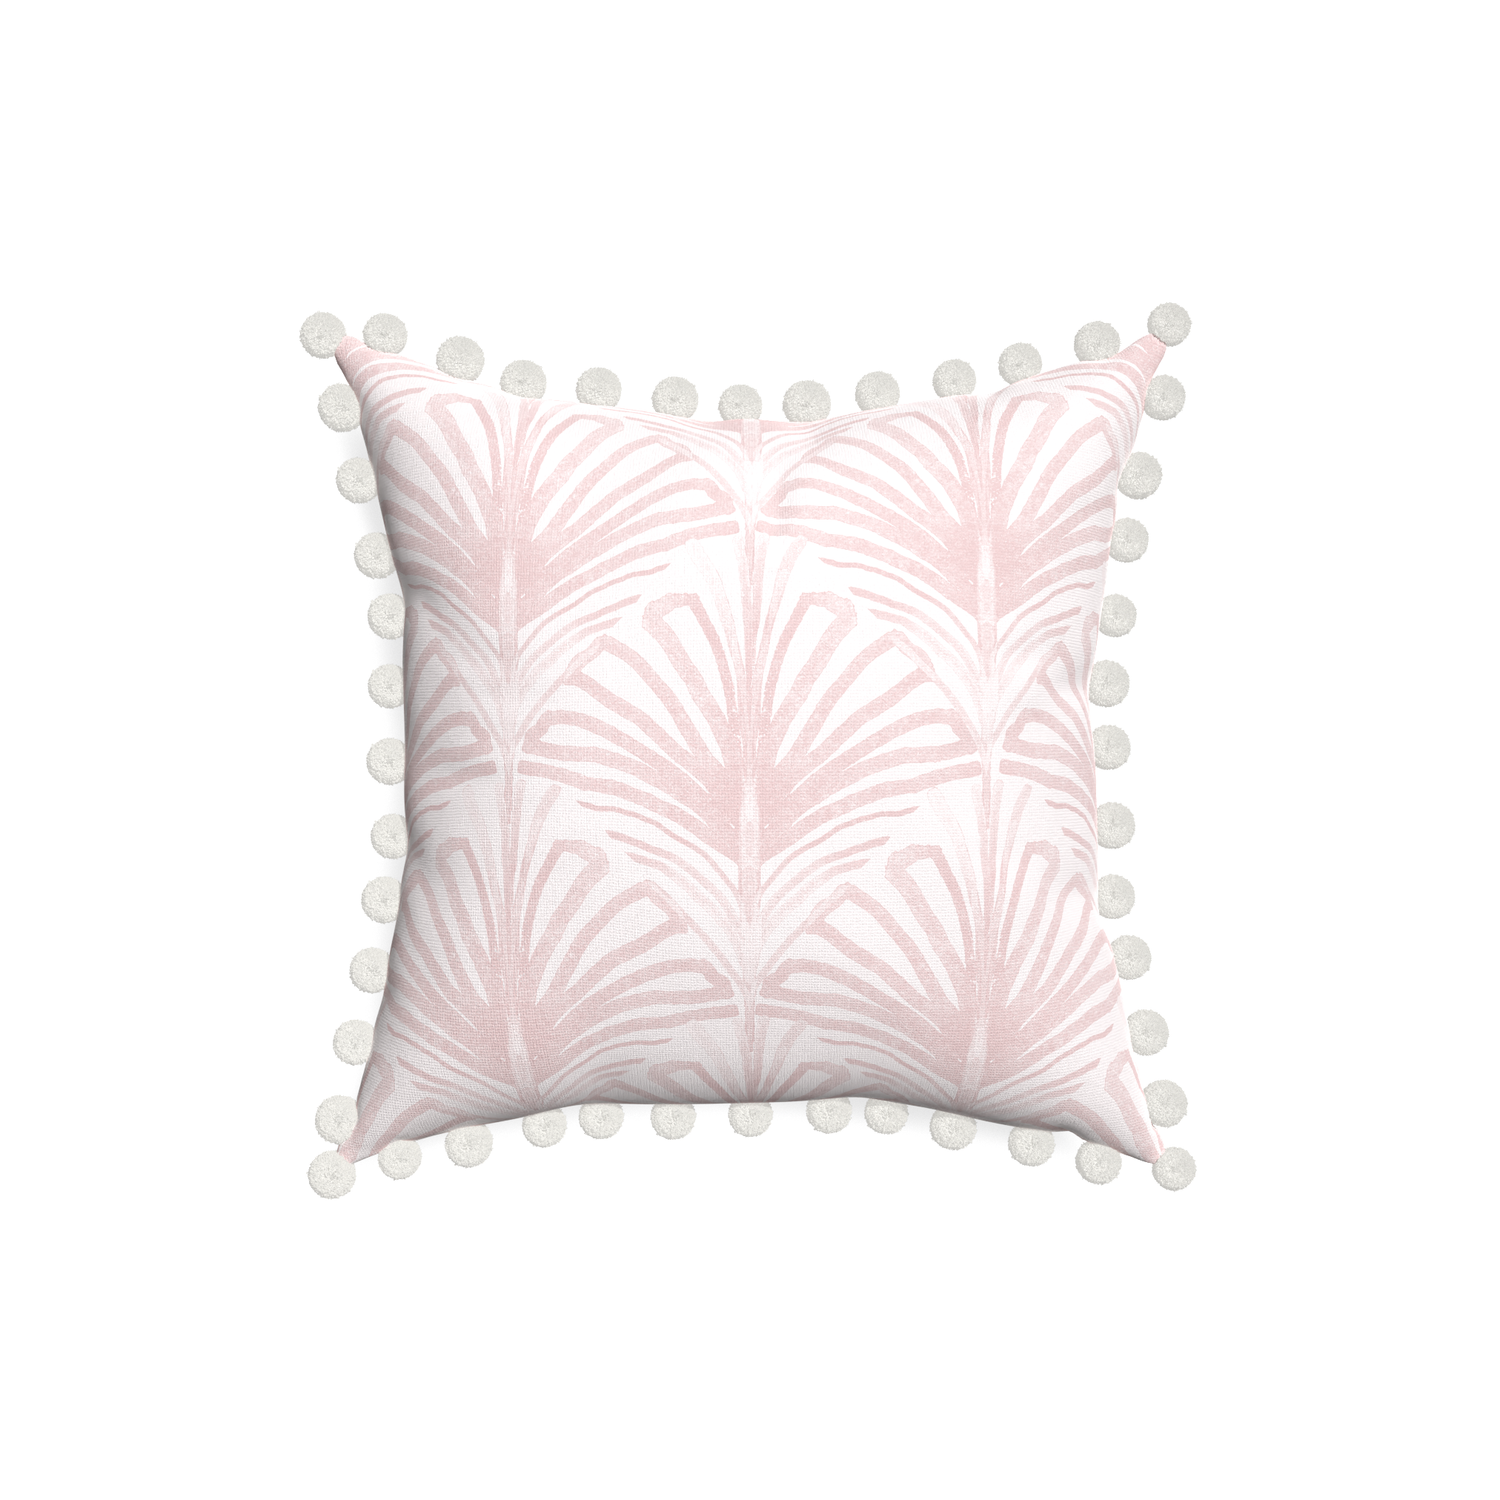 18-square suzy rose custom pillow with snow pom pom on white background